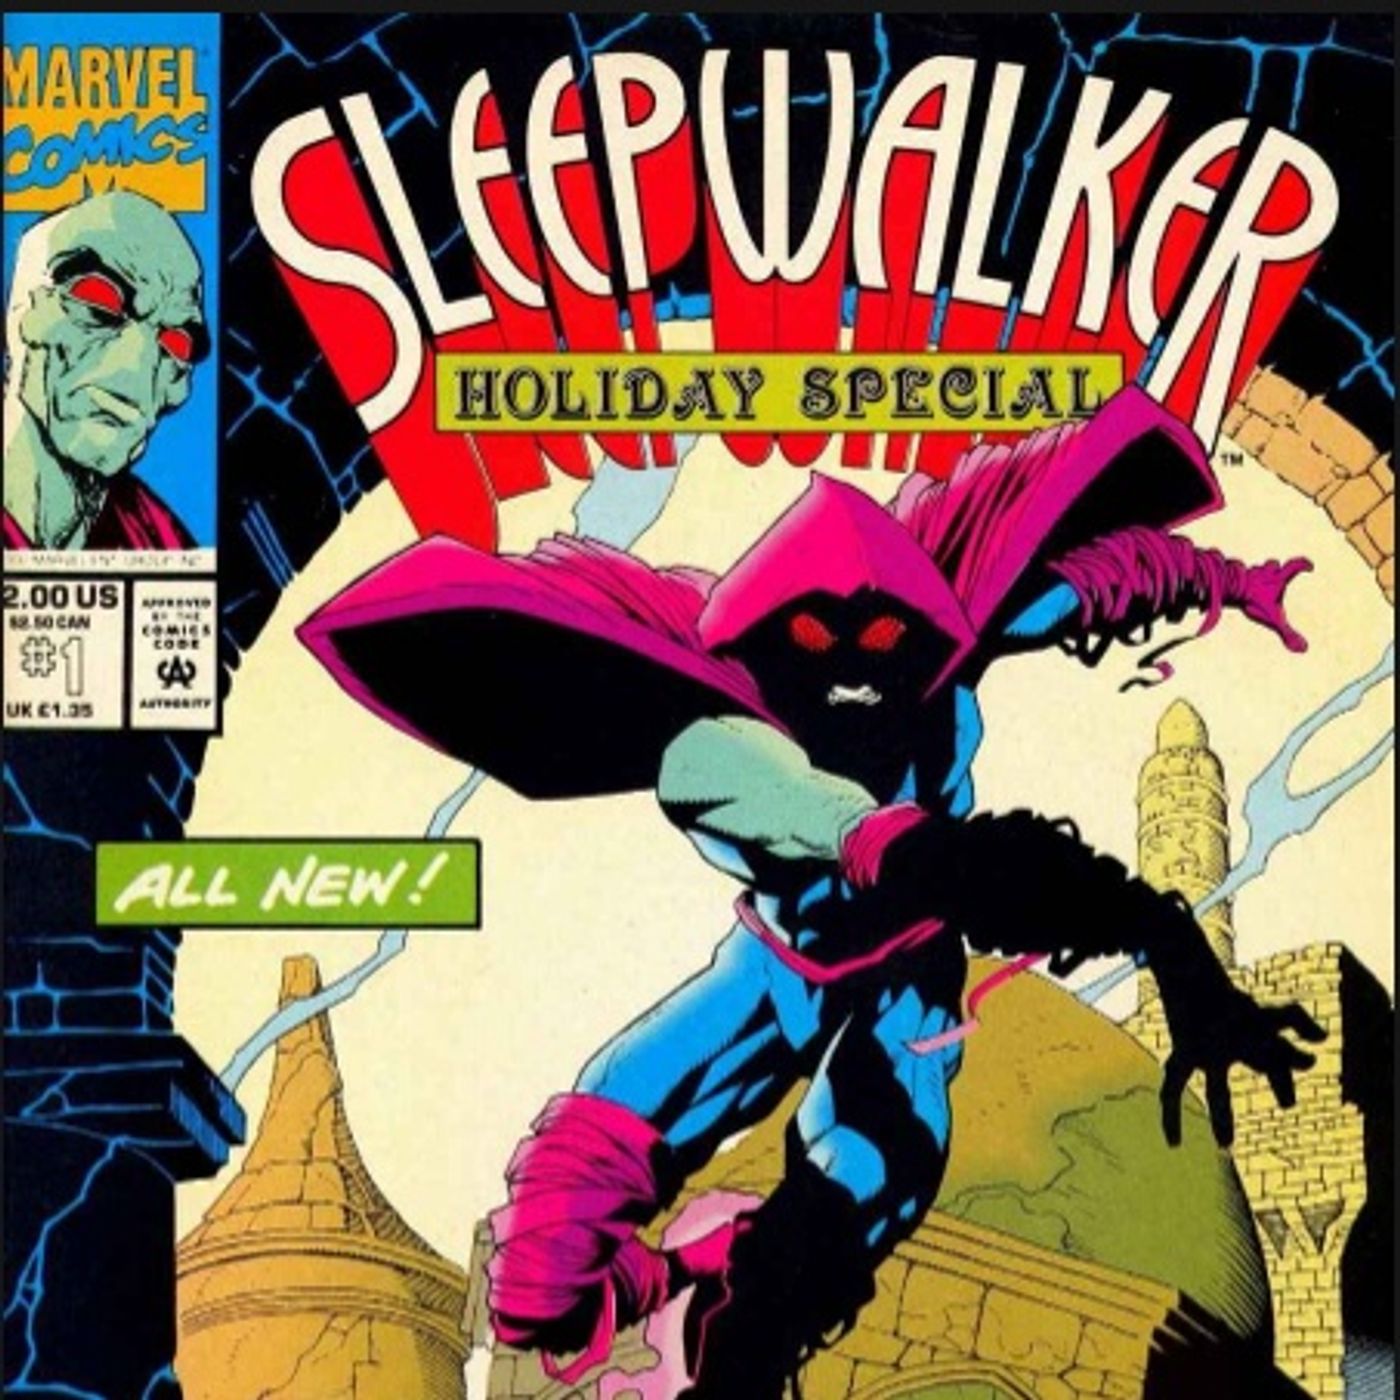 Unspoken Issues #99 - Sleepwalker Holiday Special